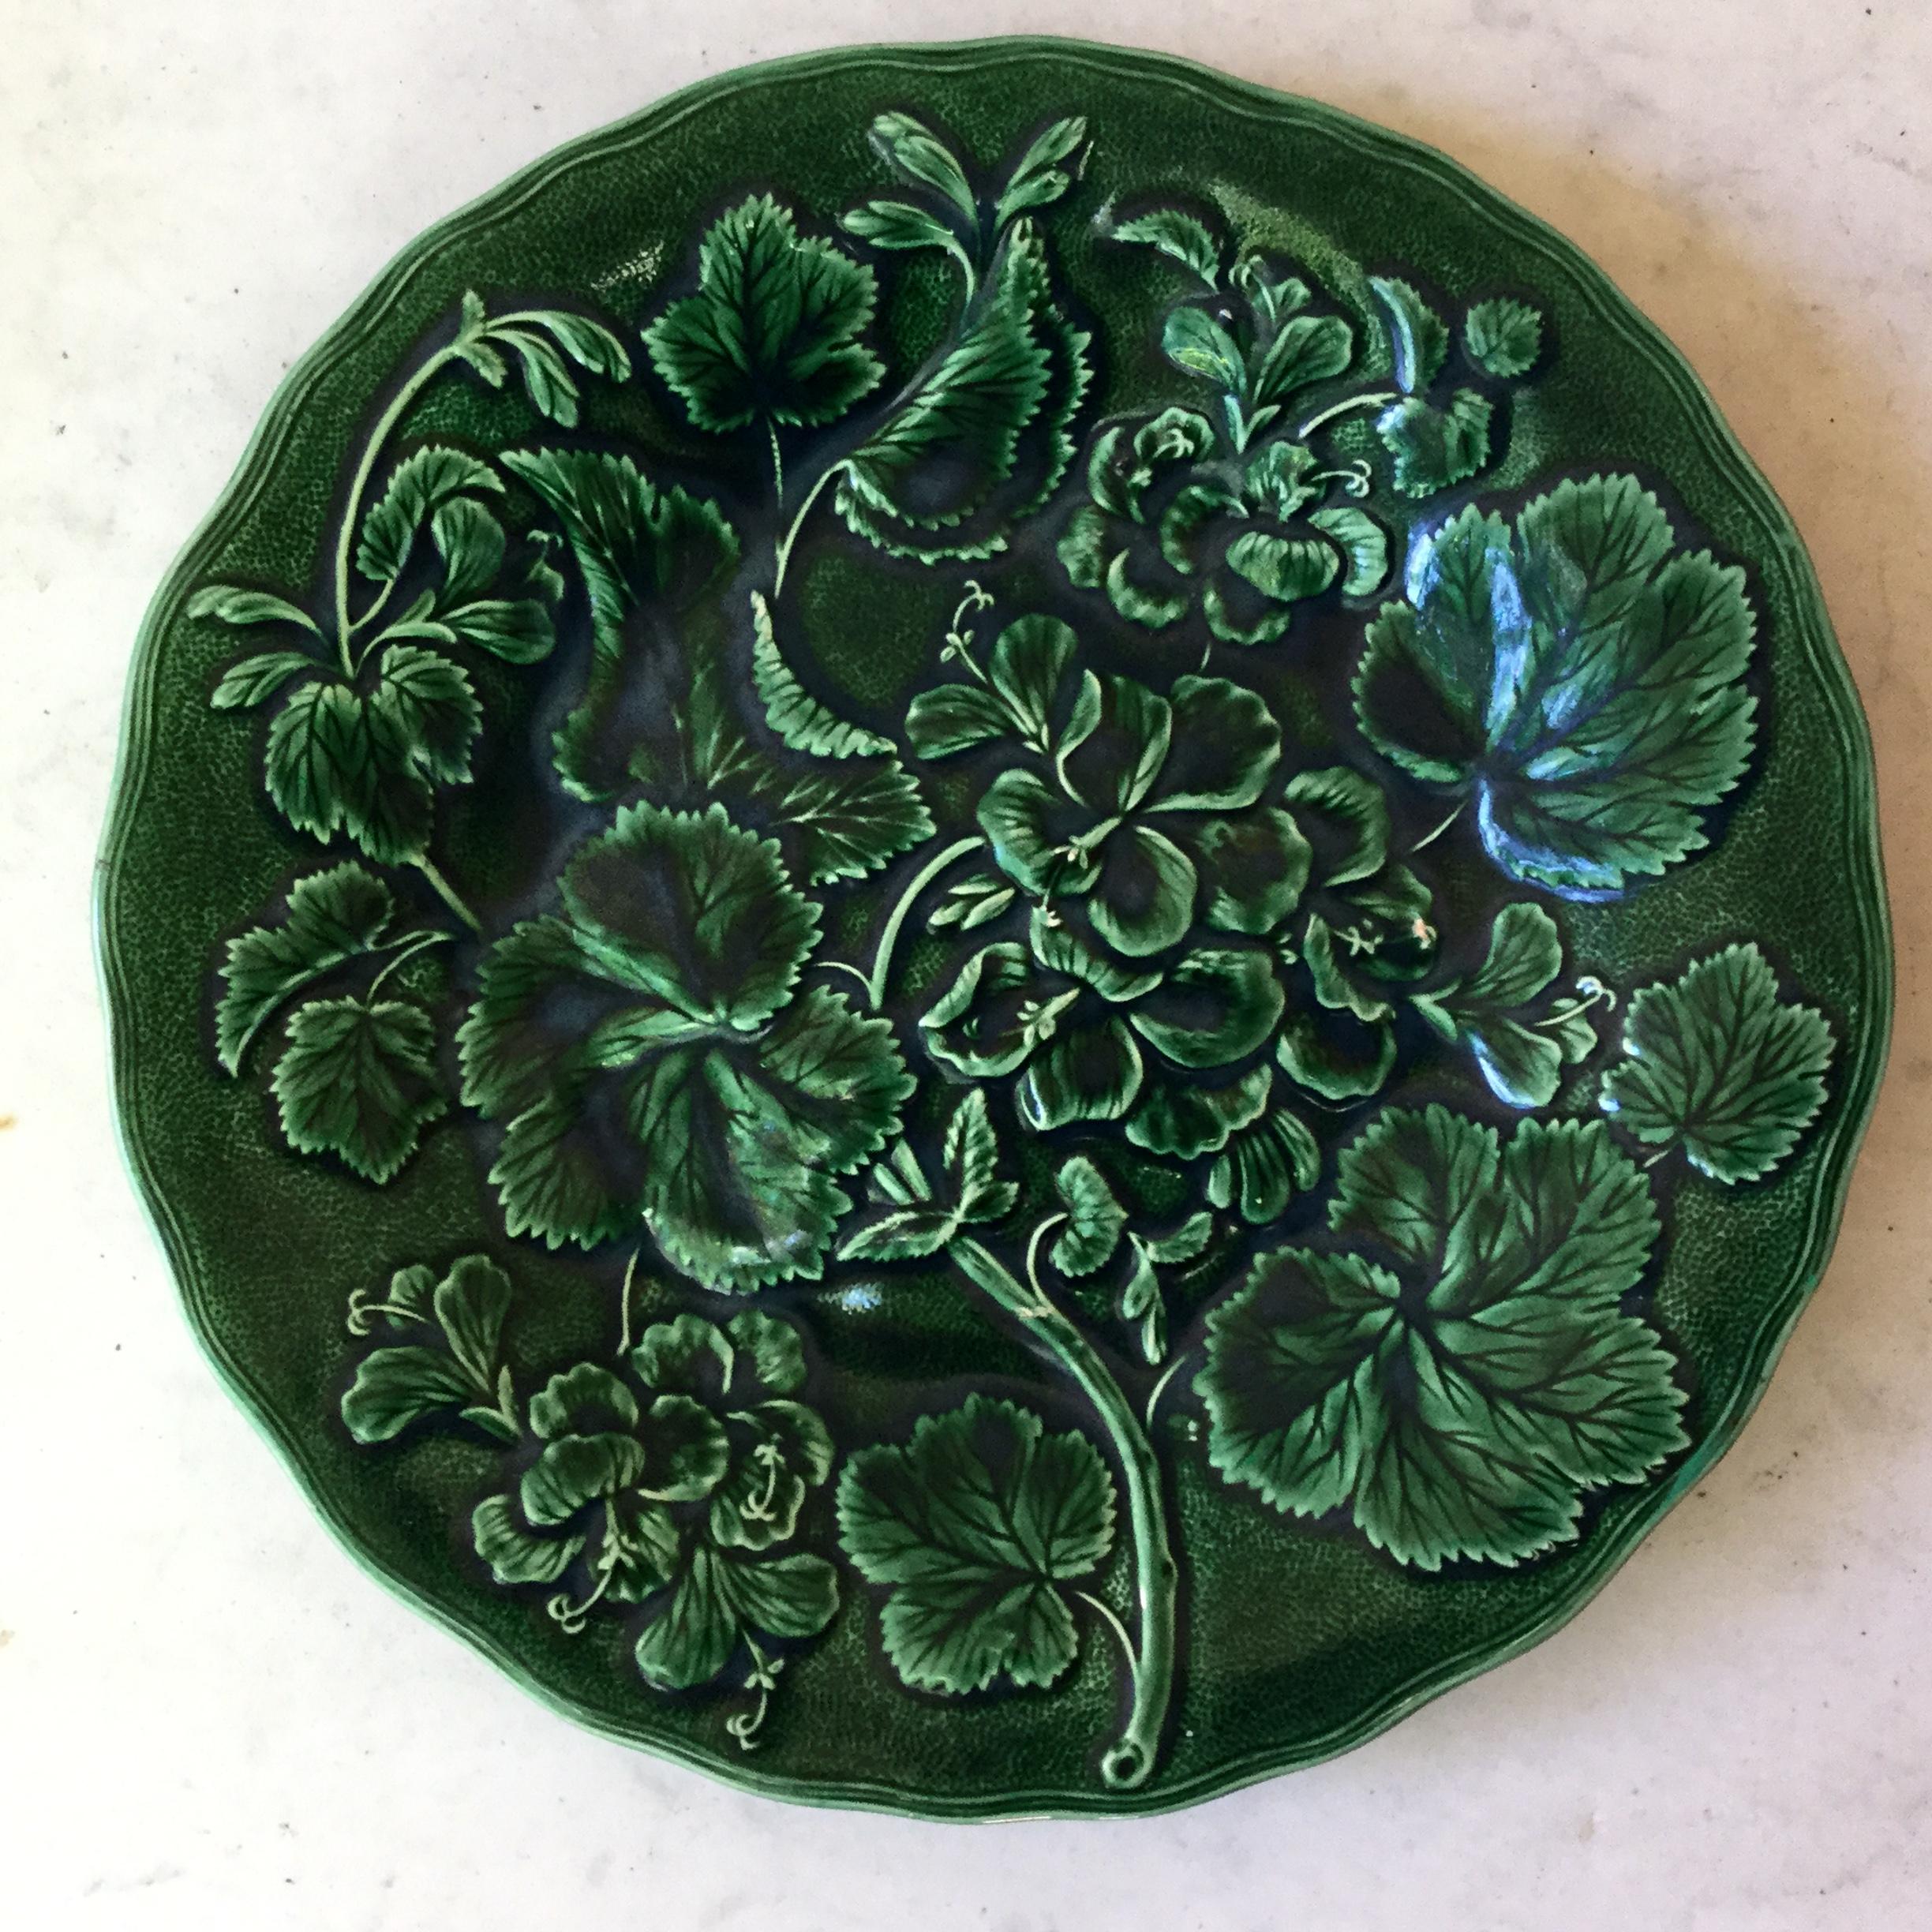 English green Victorian majolica geranium plate, circa 1880.
2 plates are available.